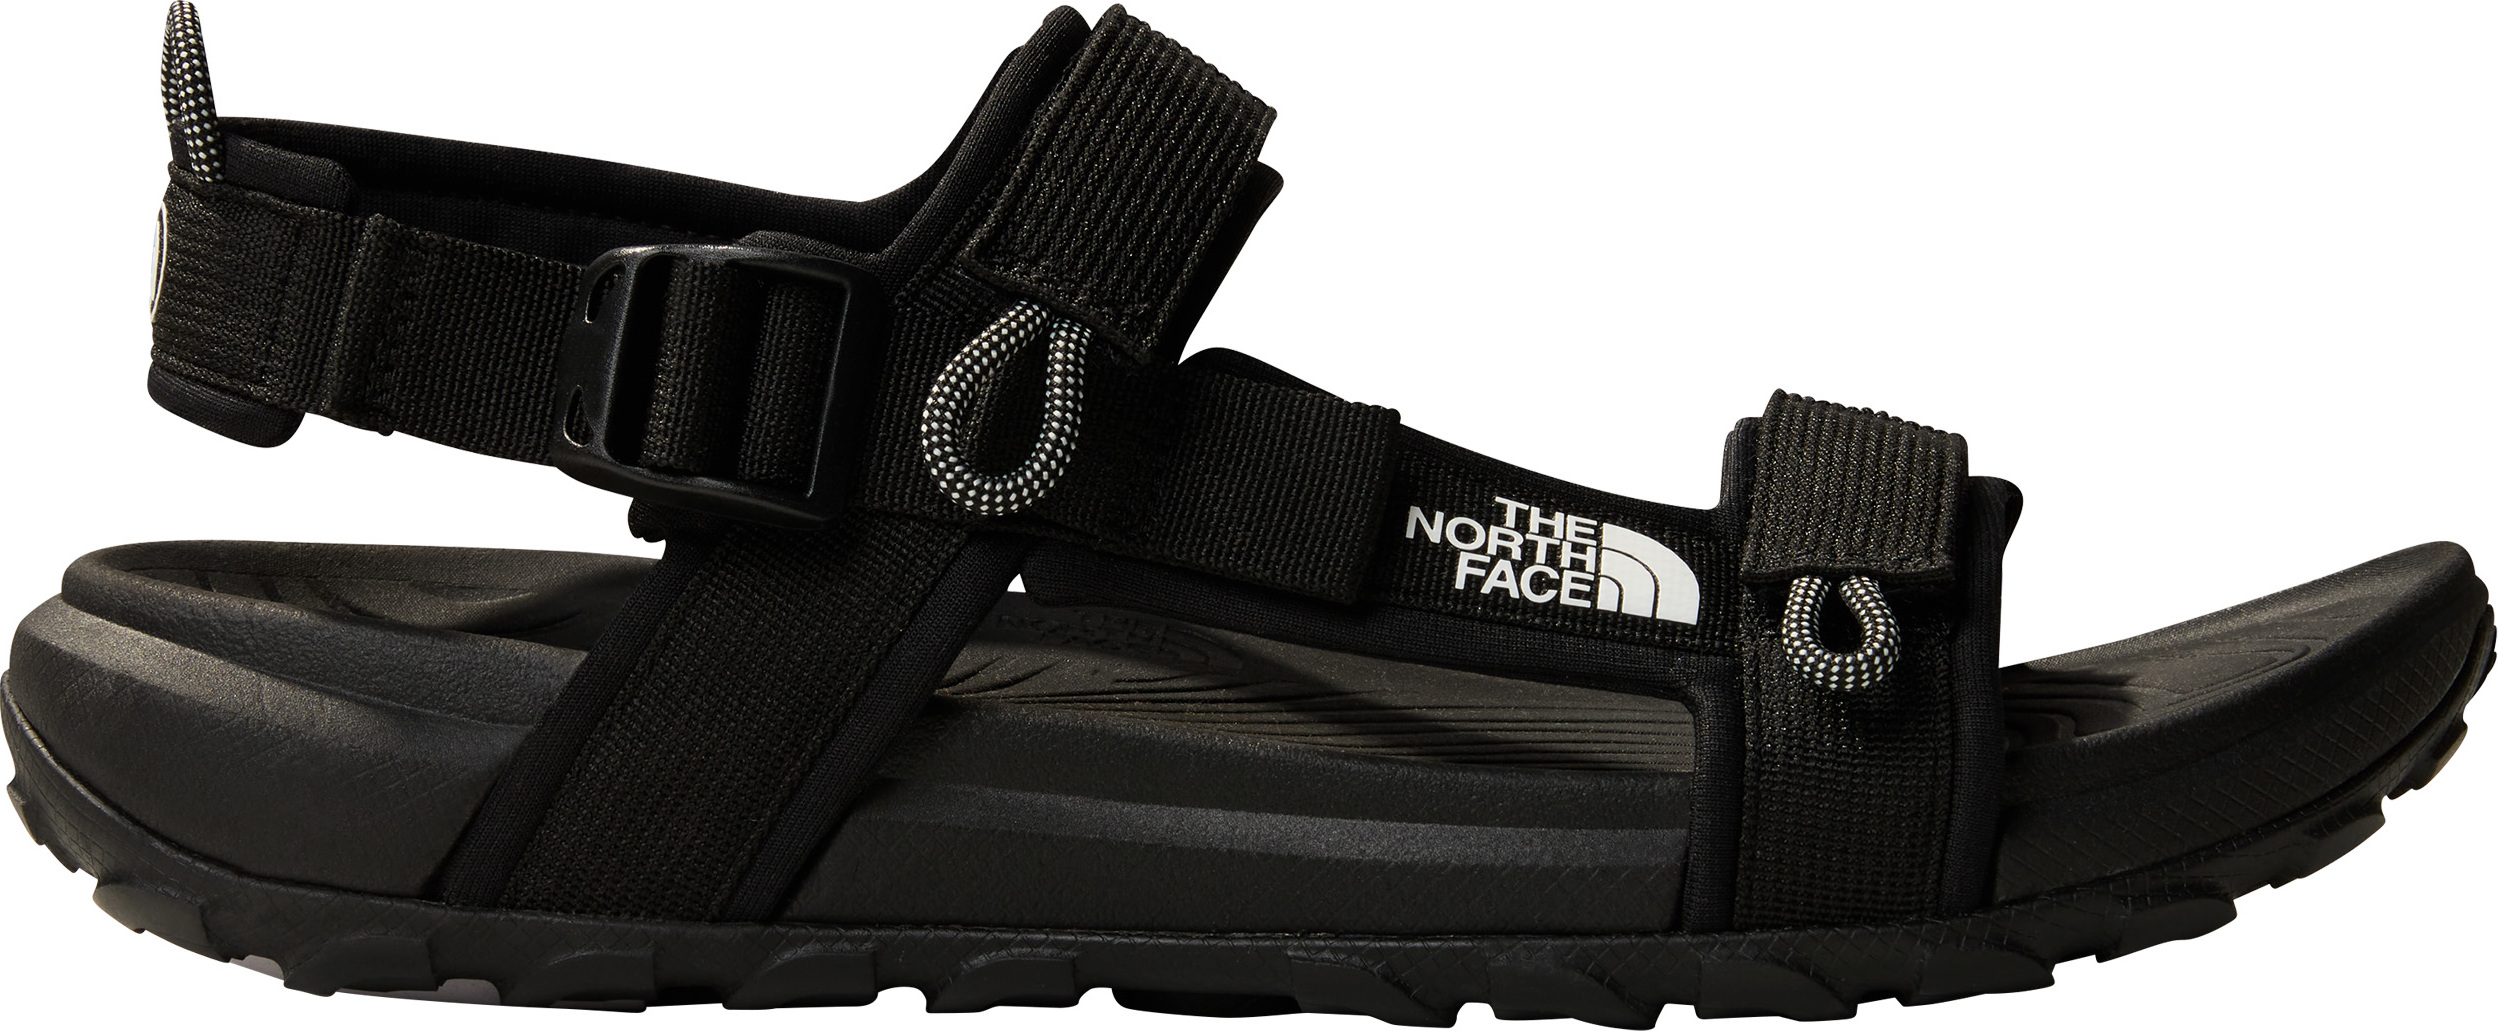 The North Face Men’s Explore Camp Sandals TNF Black/TNF Black